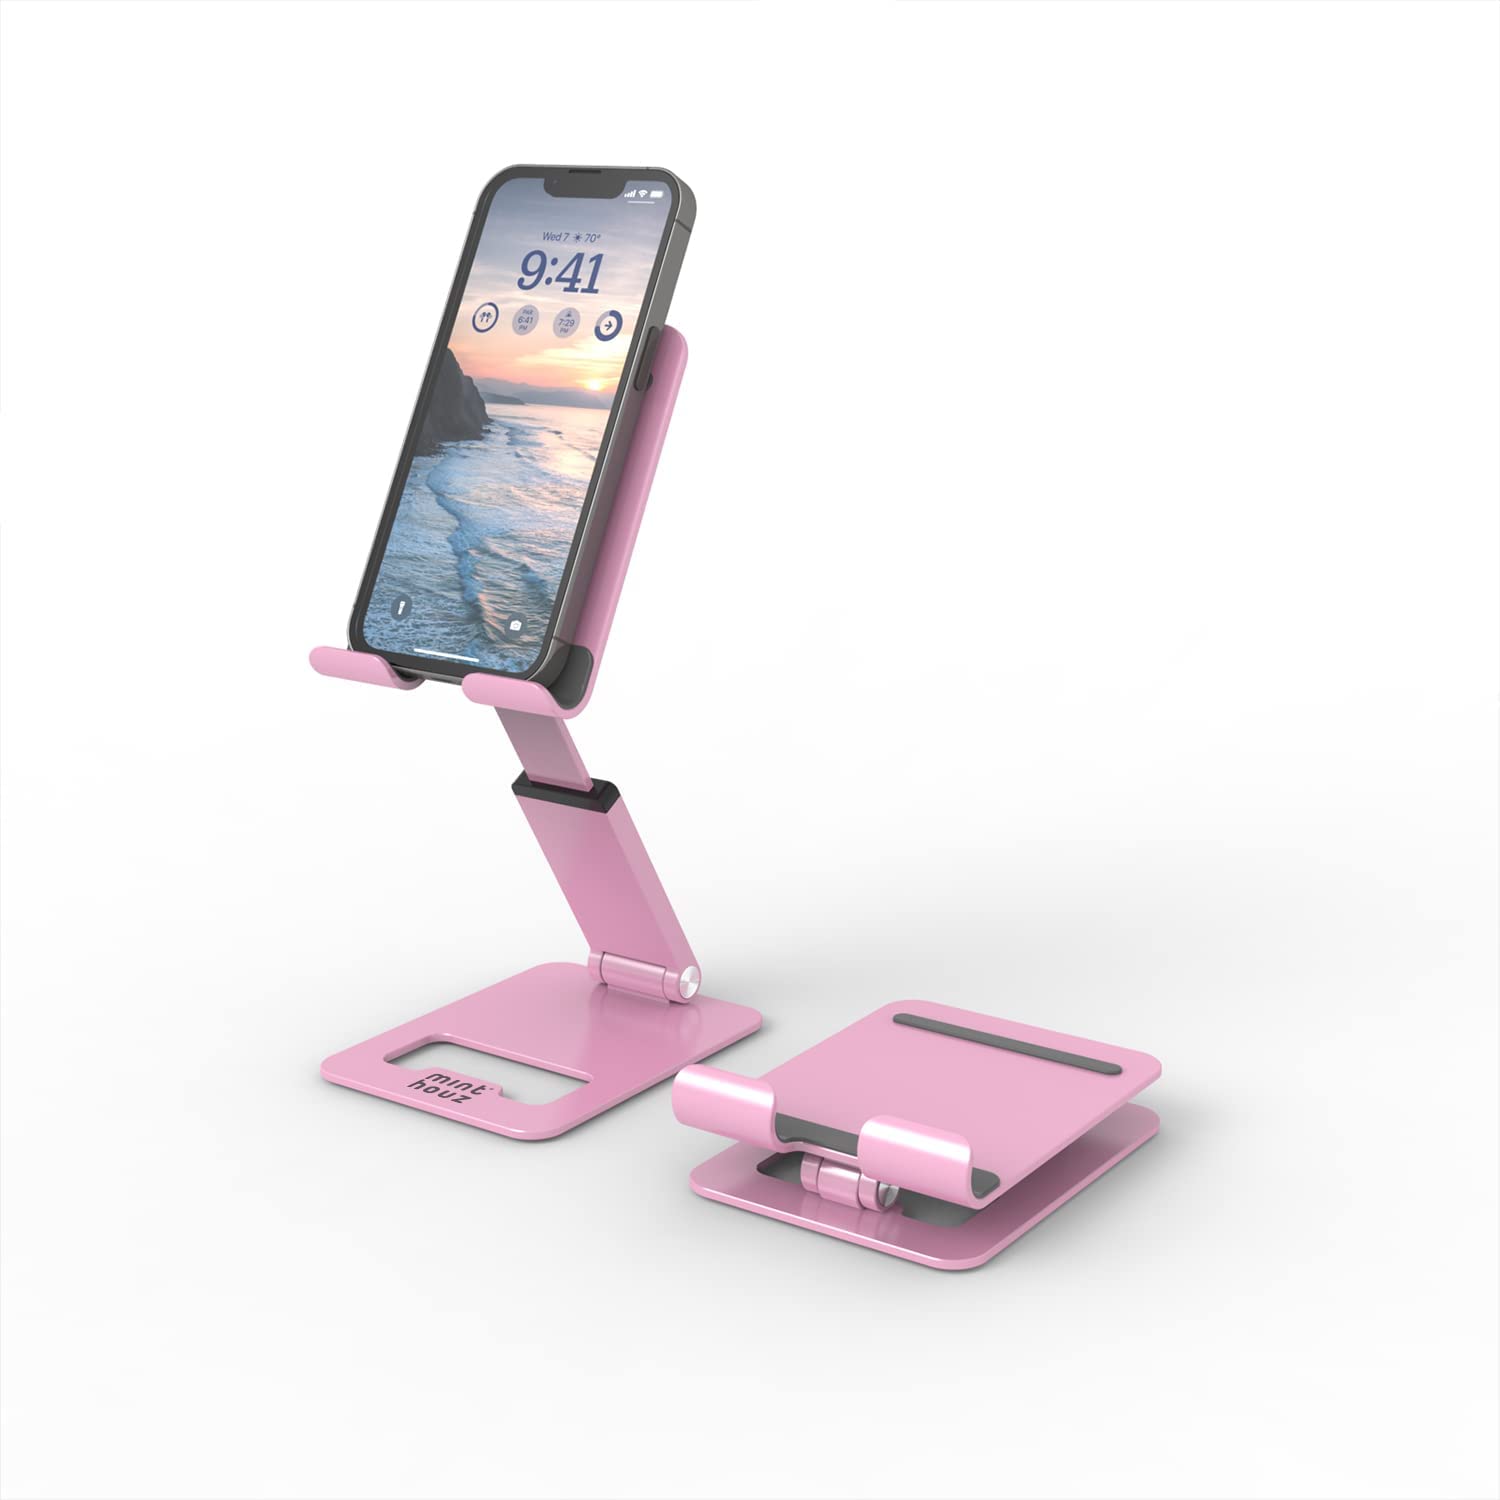 Minthouz スマホスタンド 携帯スタンド 卓上スタンド 可愛い 角度高さ調整 姿勢改善 腰痛/猫背解消 折りたたみ式 iPhone 13 Pro Max Mini 12 11 Samsung Galaxy S21+ S21 iPad Mini 5 4 など4.7-7.9インチの機種に対応 スマホスタンド ピンク